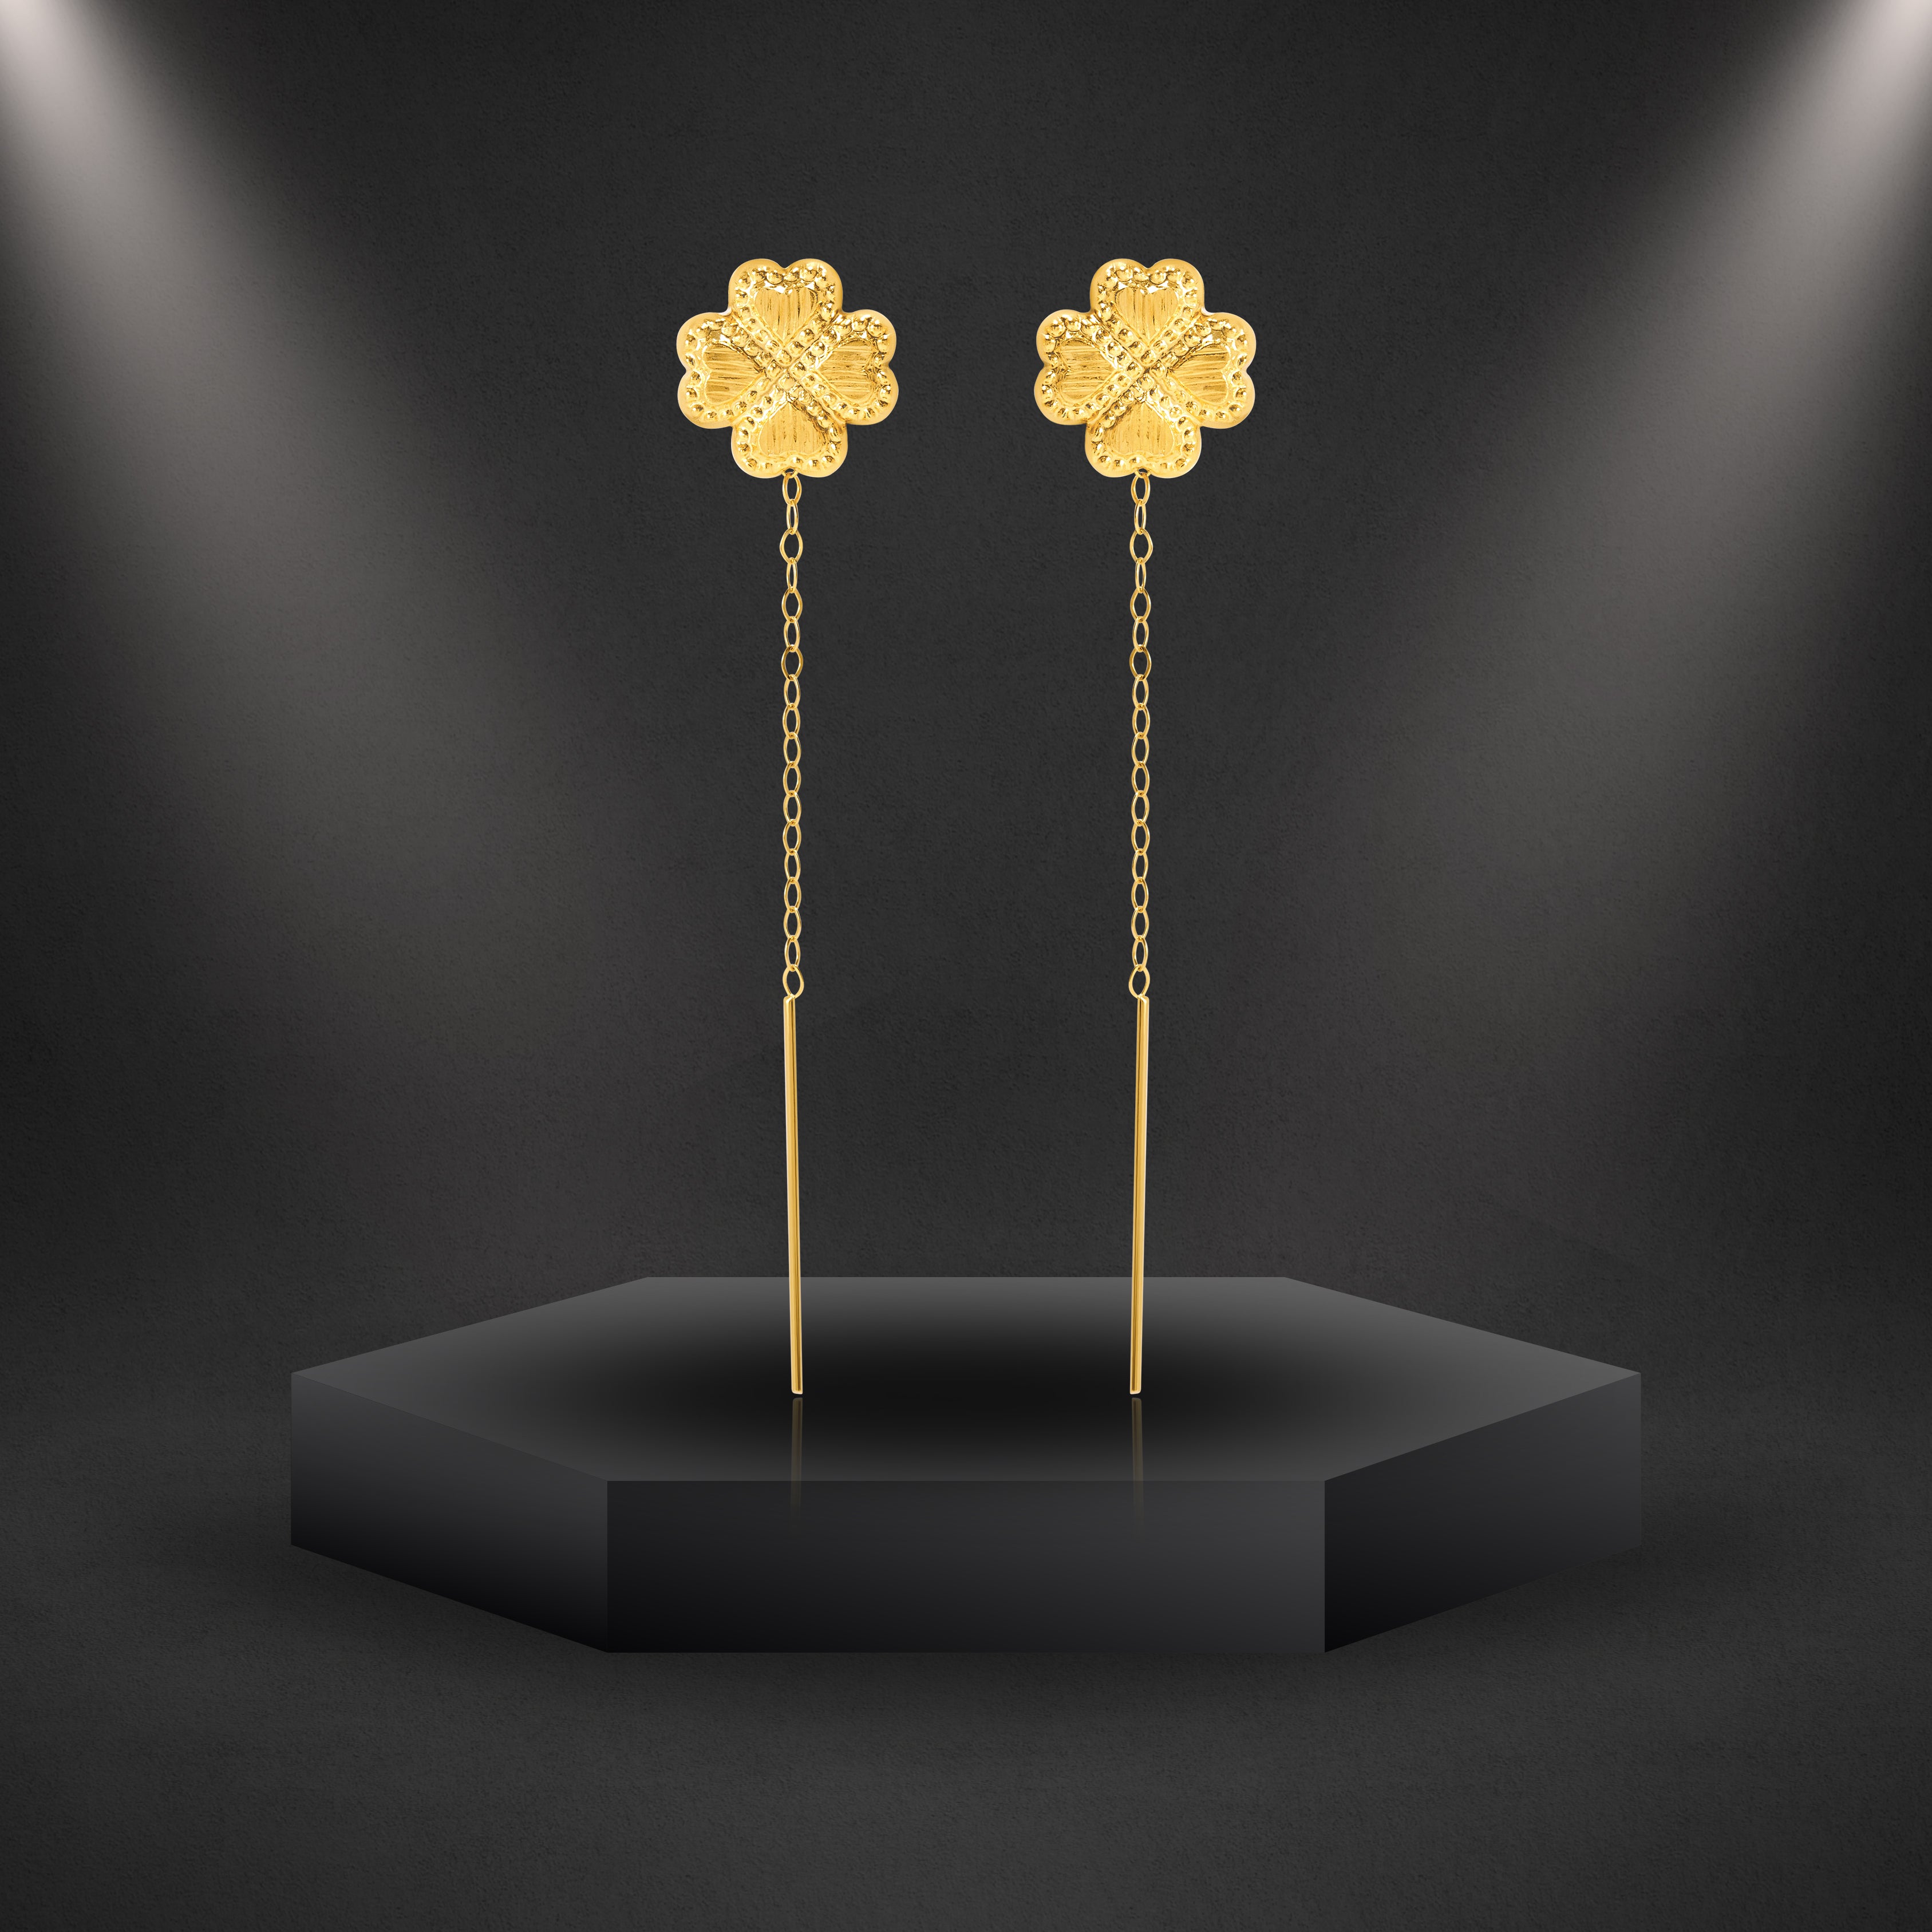 18K Pure Gold Flower Hanging Earring Set